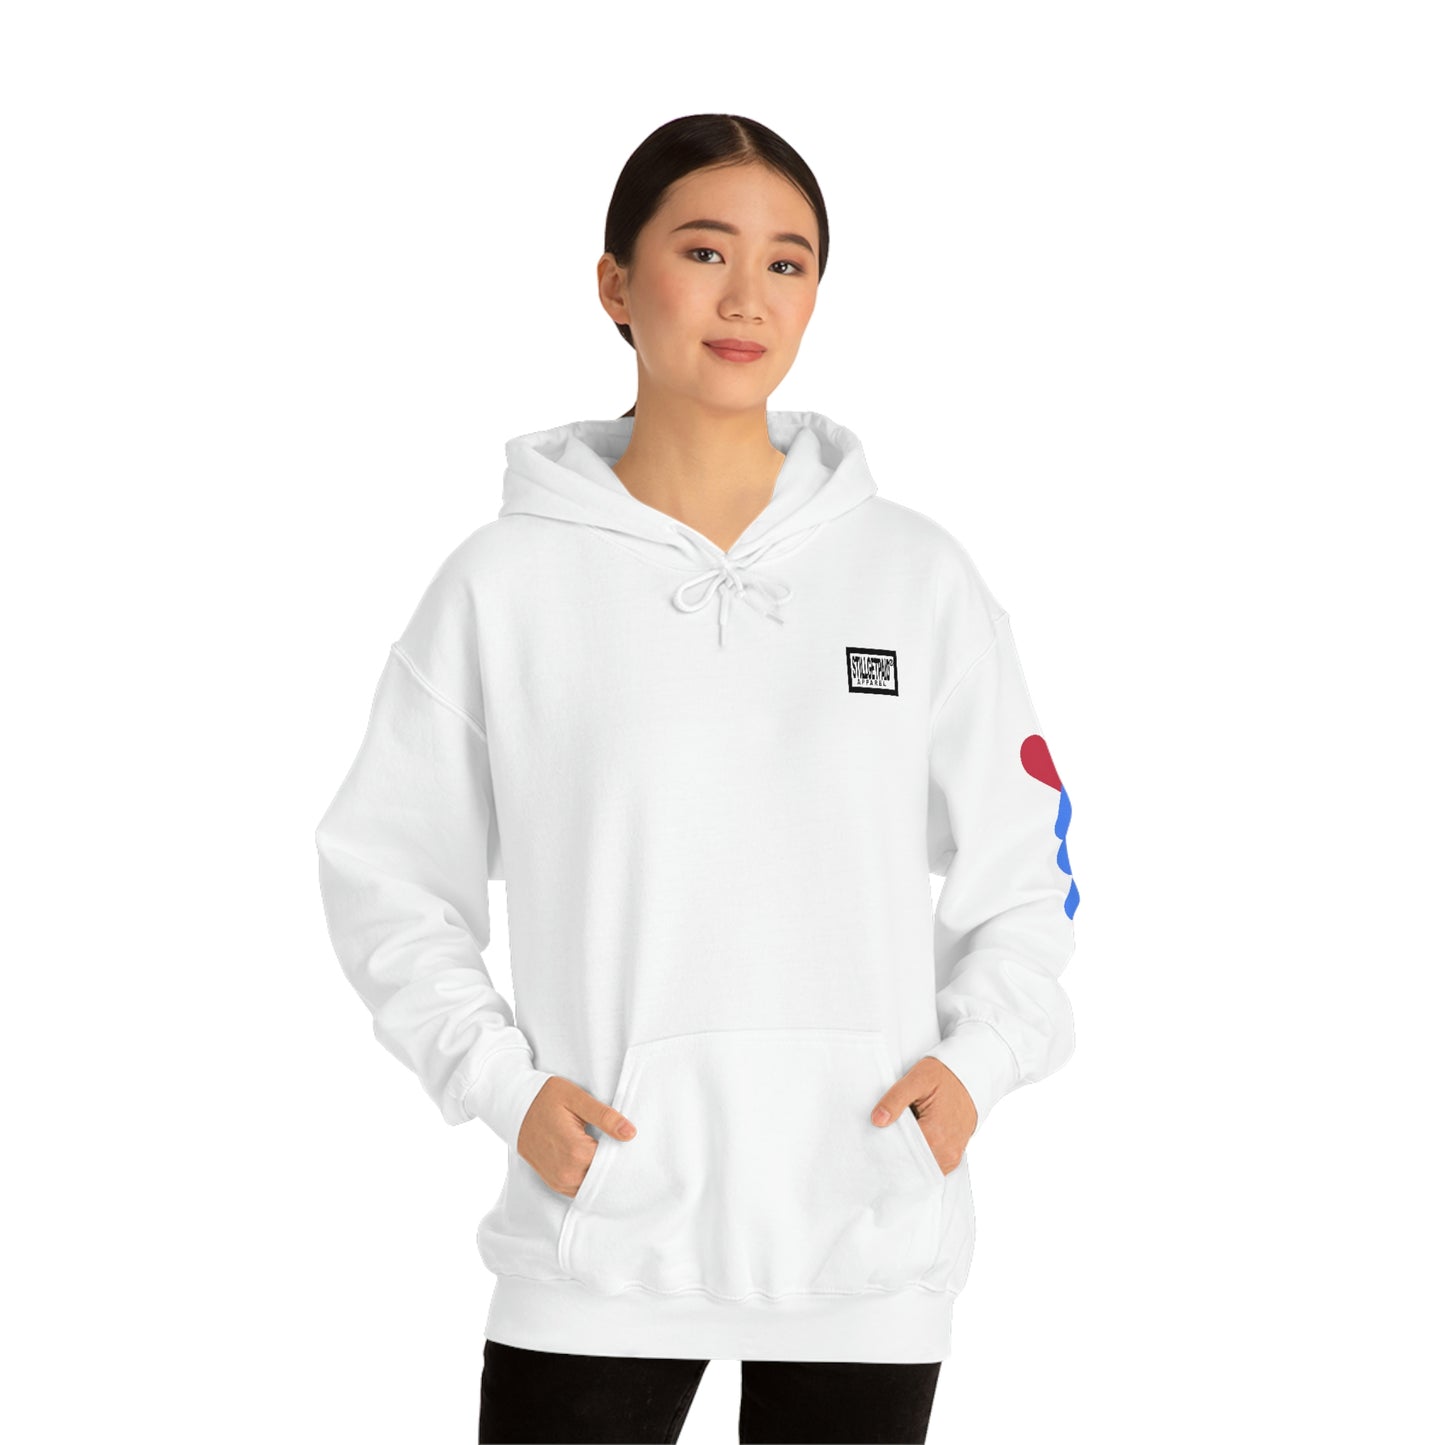 STILLGETPAID® APPAREL Unisex Heavy Blend Hooded Sweatshirt